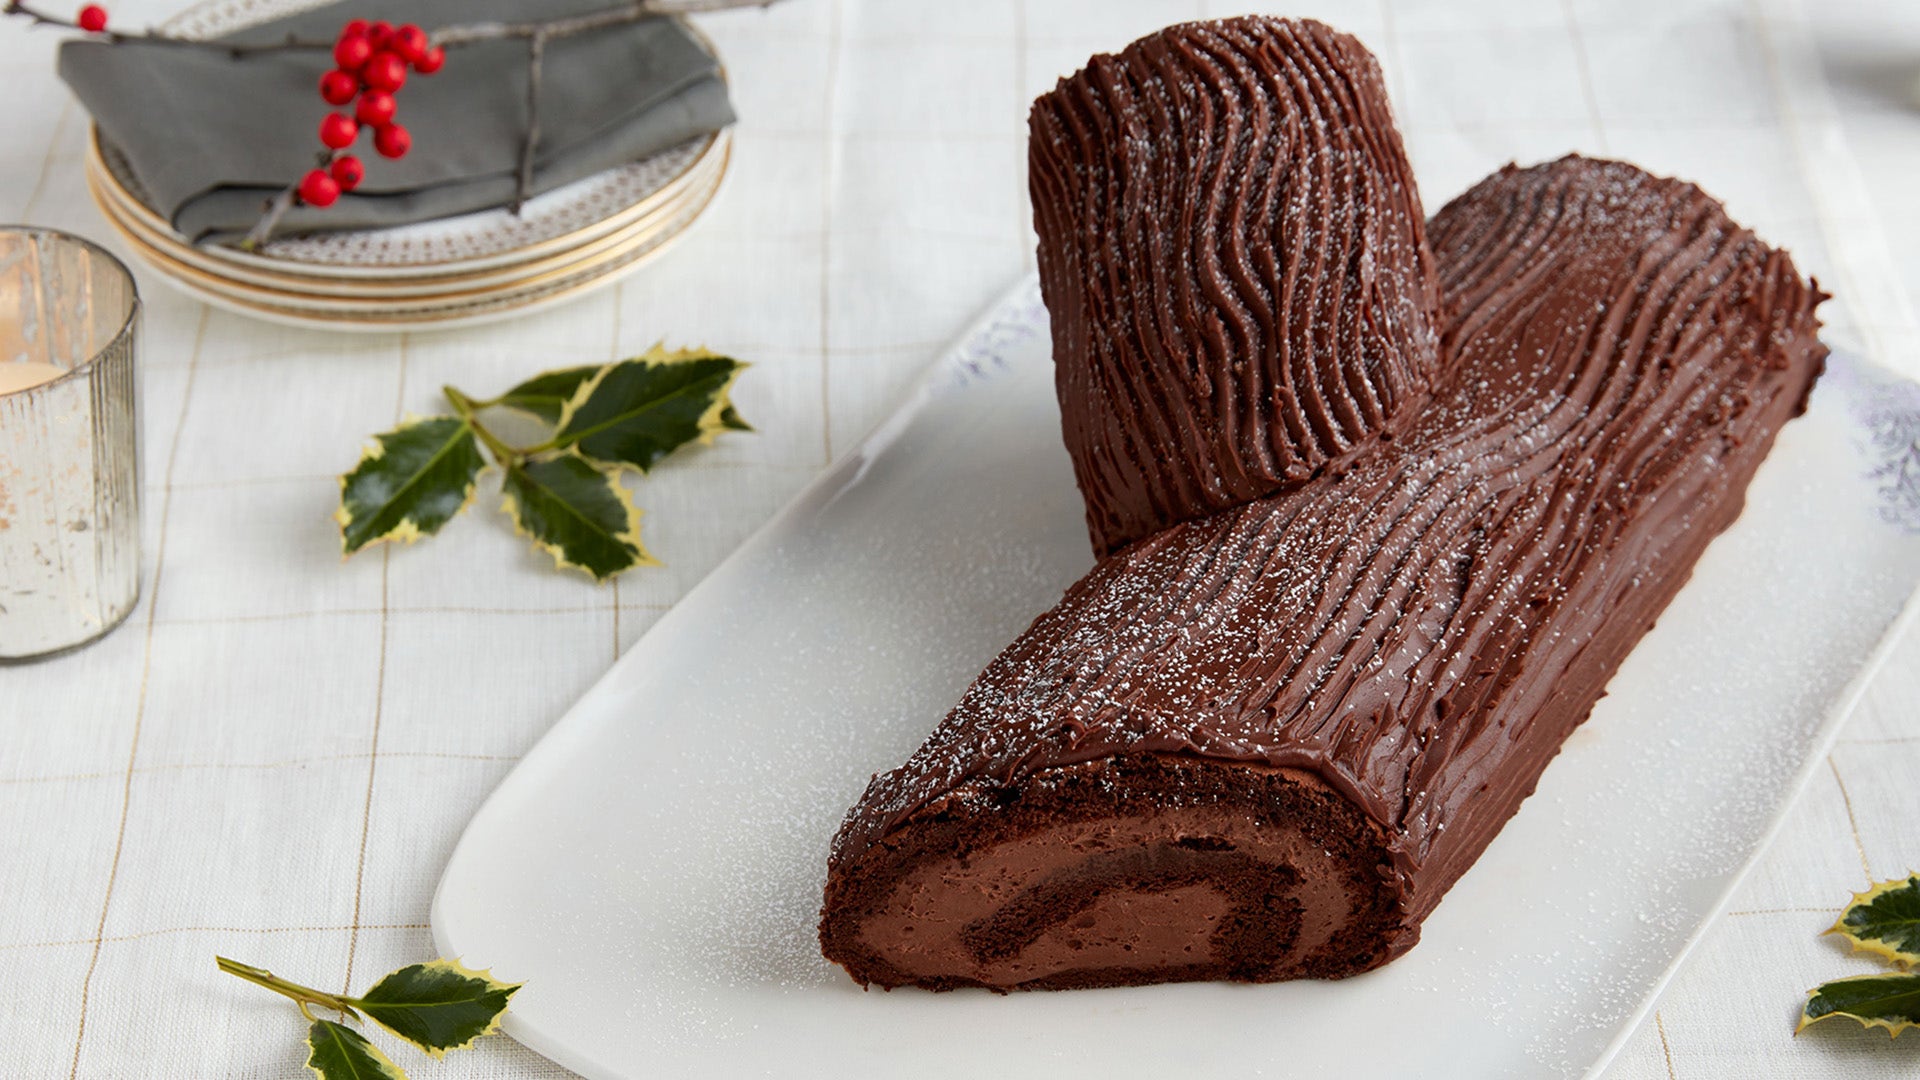 Protein Chocolate Log Cake - The Best Healthy Yule Log!